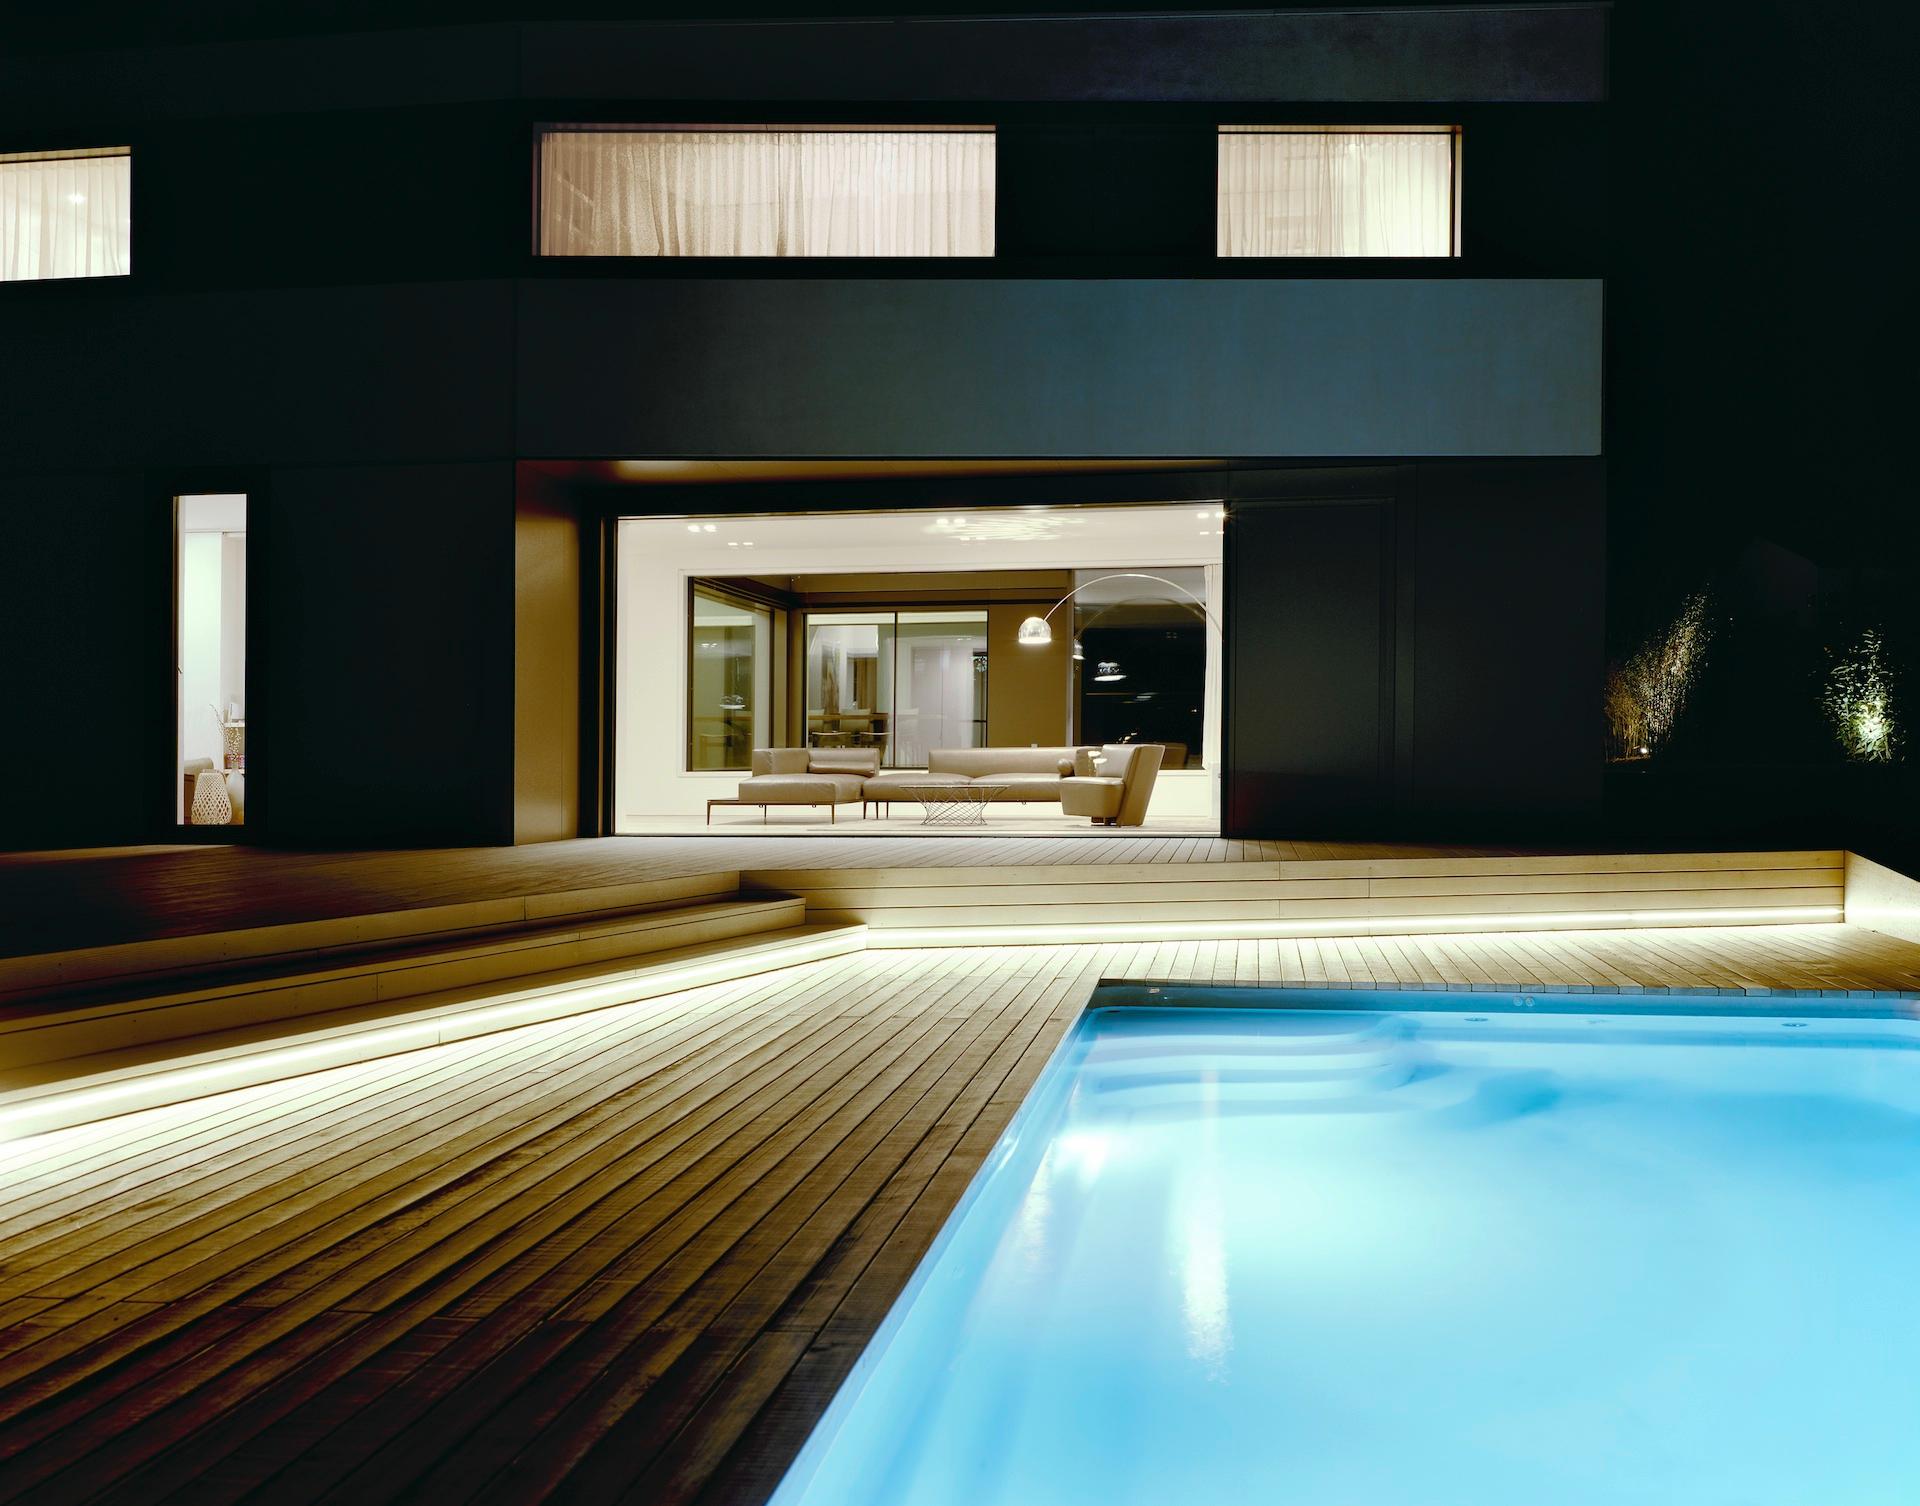 Terrasse am Pool #pool #terrasse #terrasseampool ©Brigida González, Stuttgart